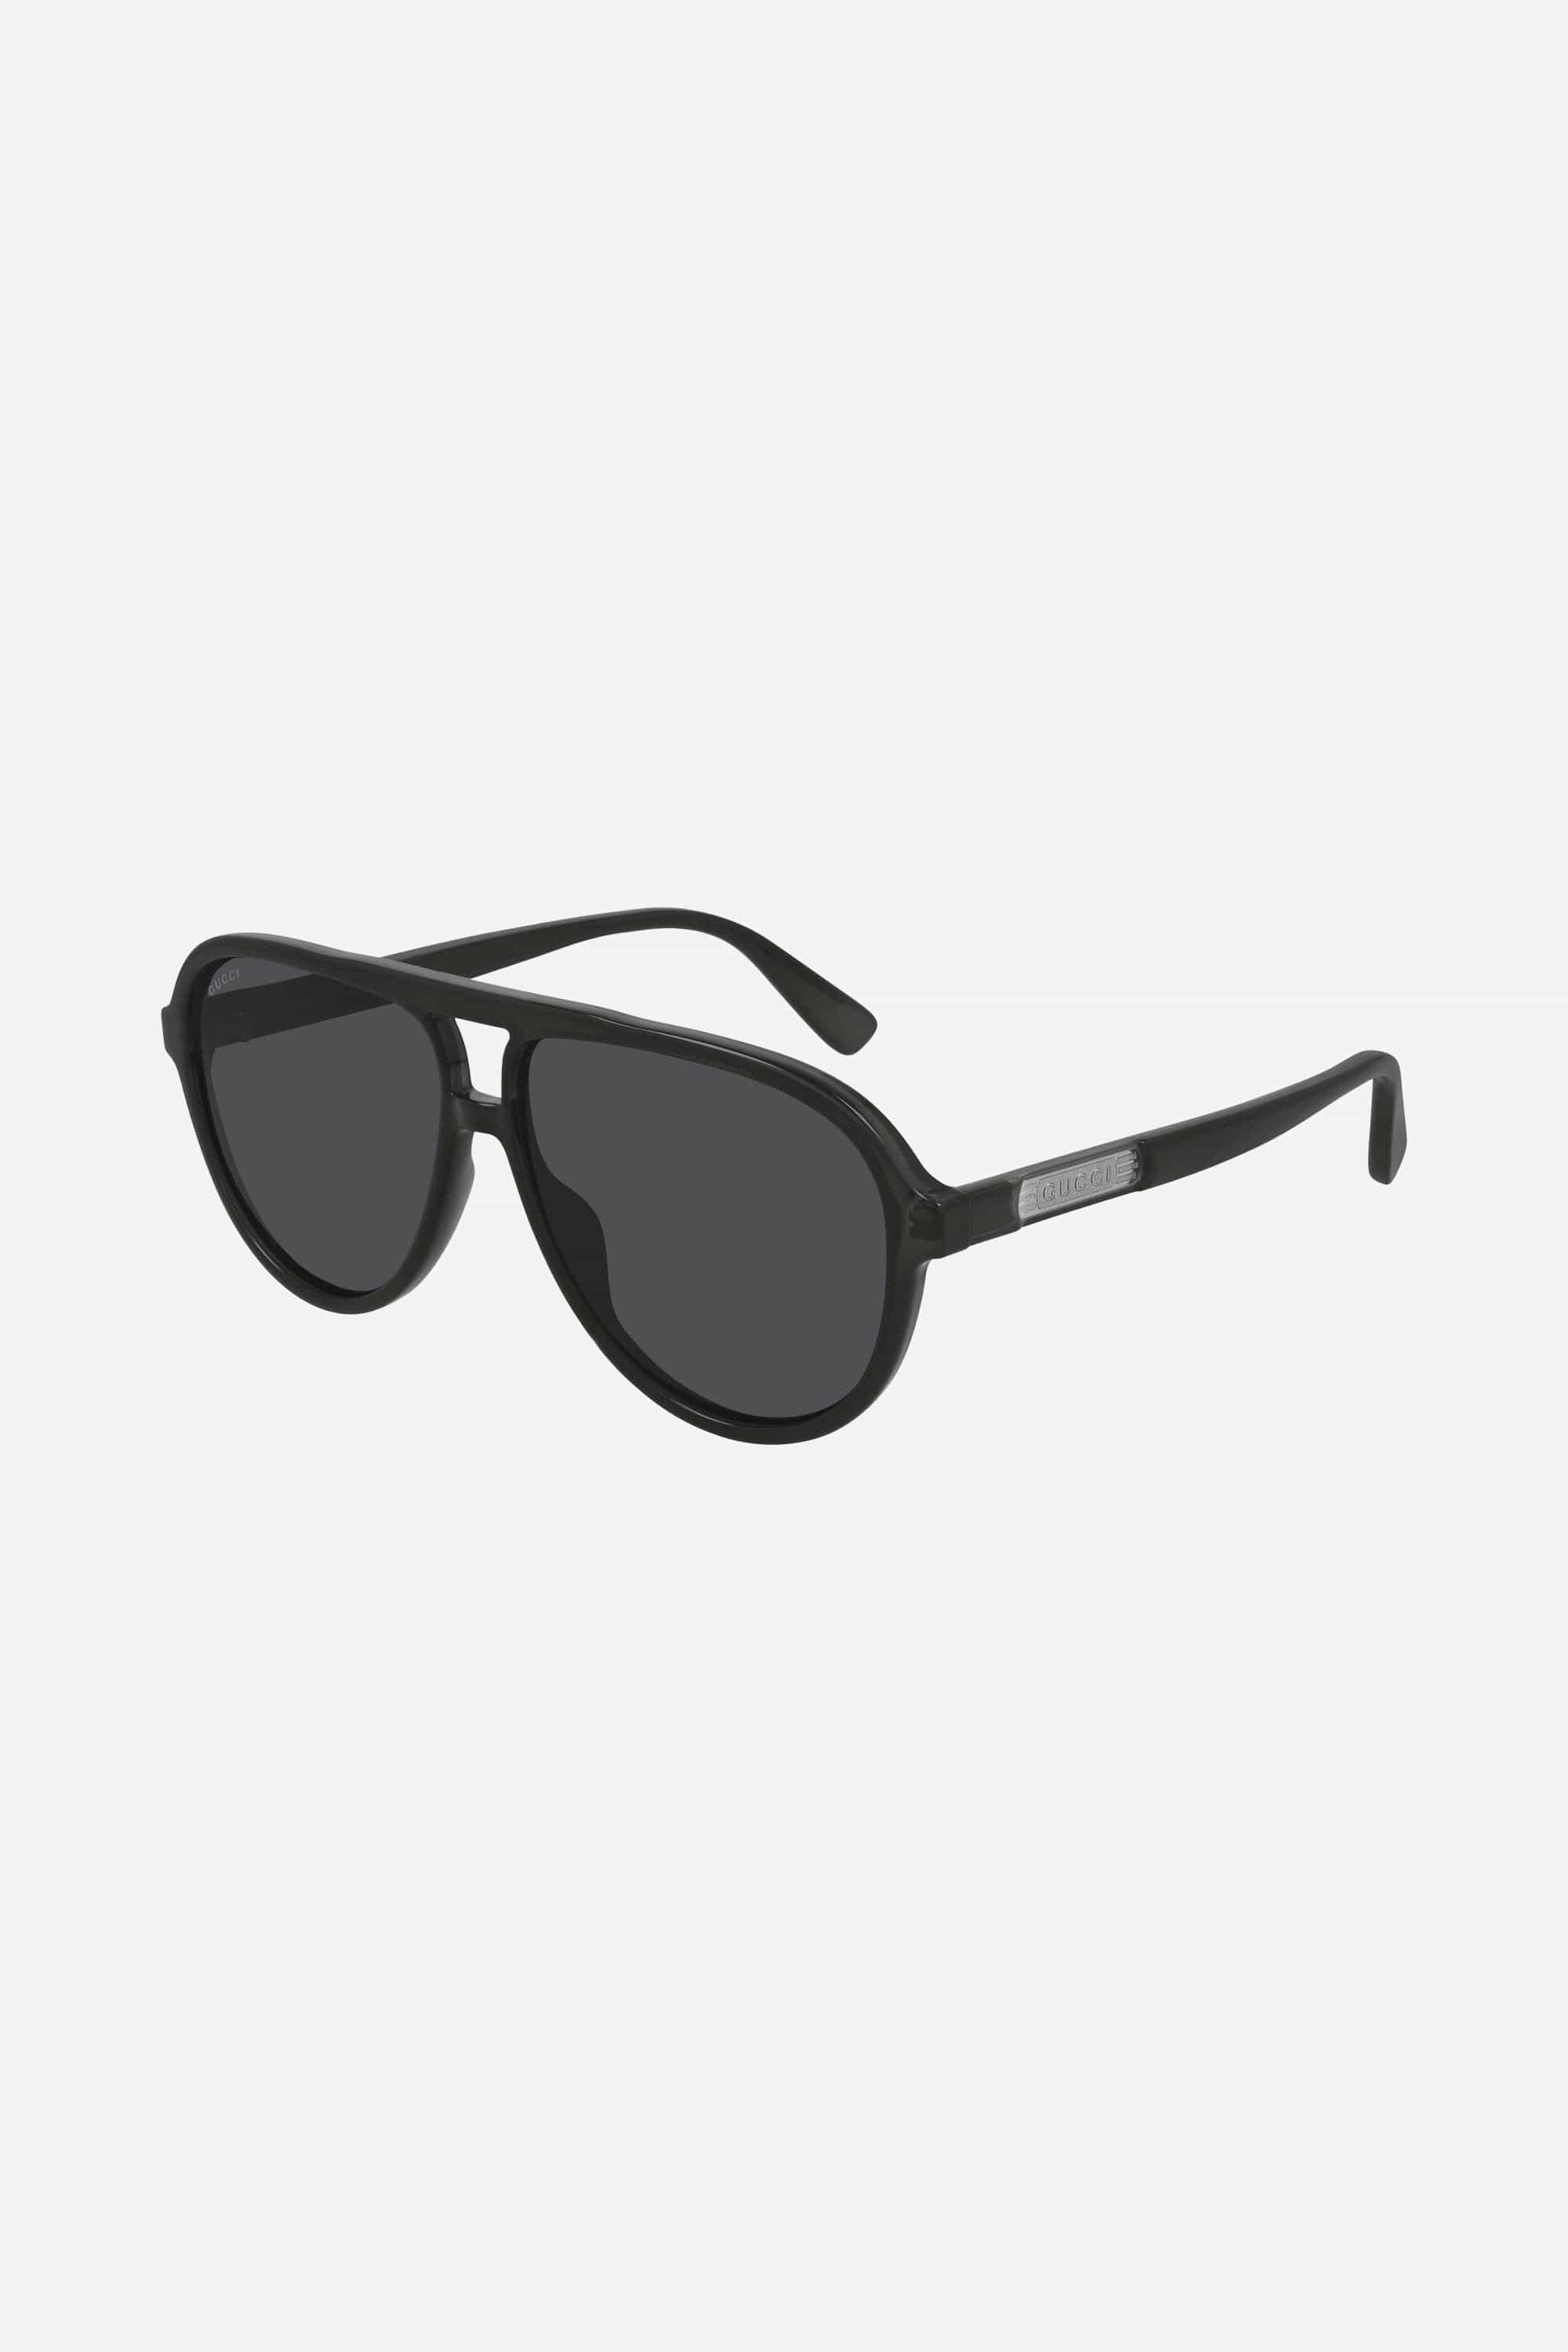 Gucci pilot grey acetate sunglasses - Eyewear Club